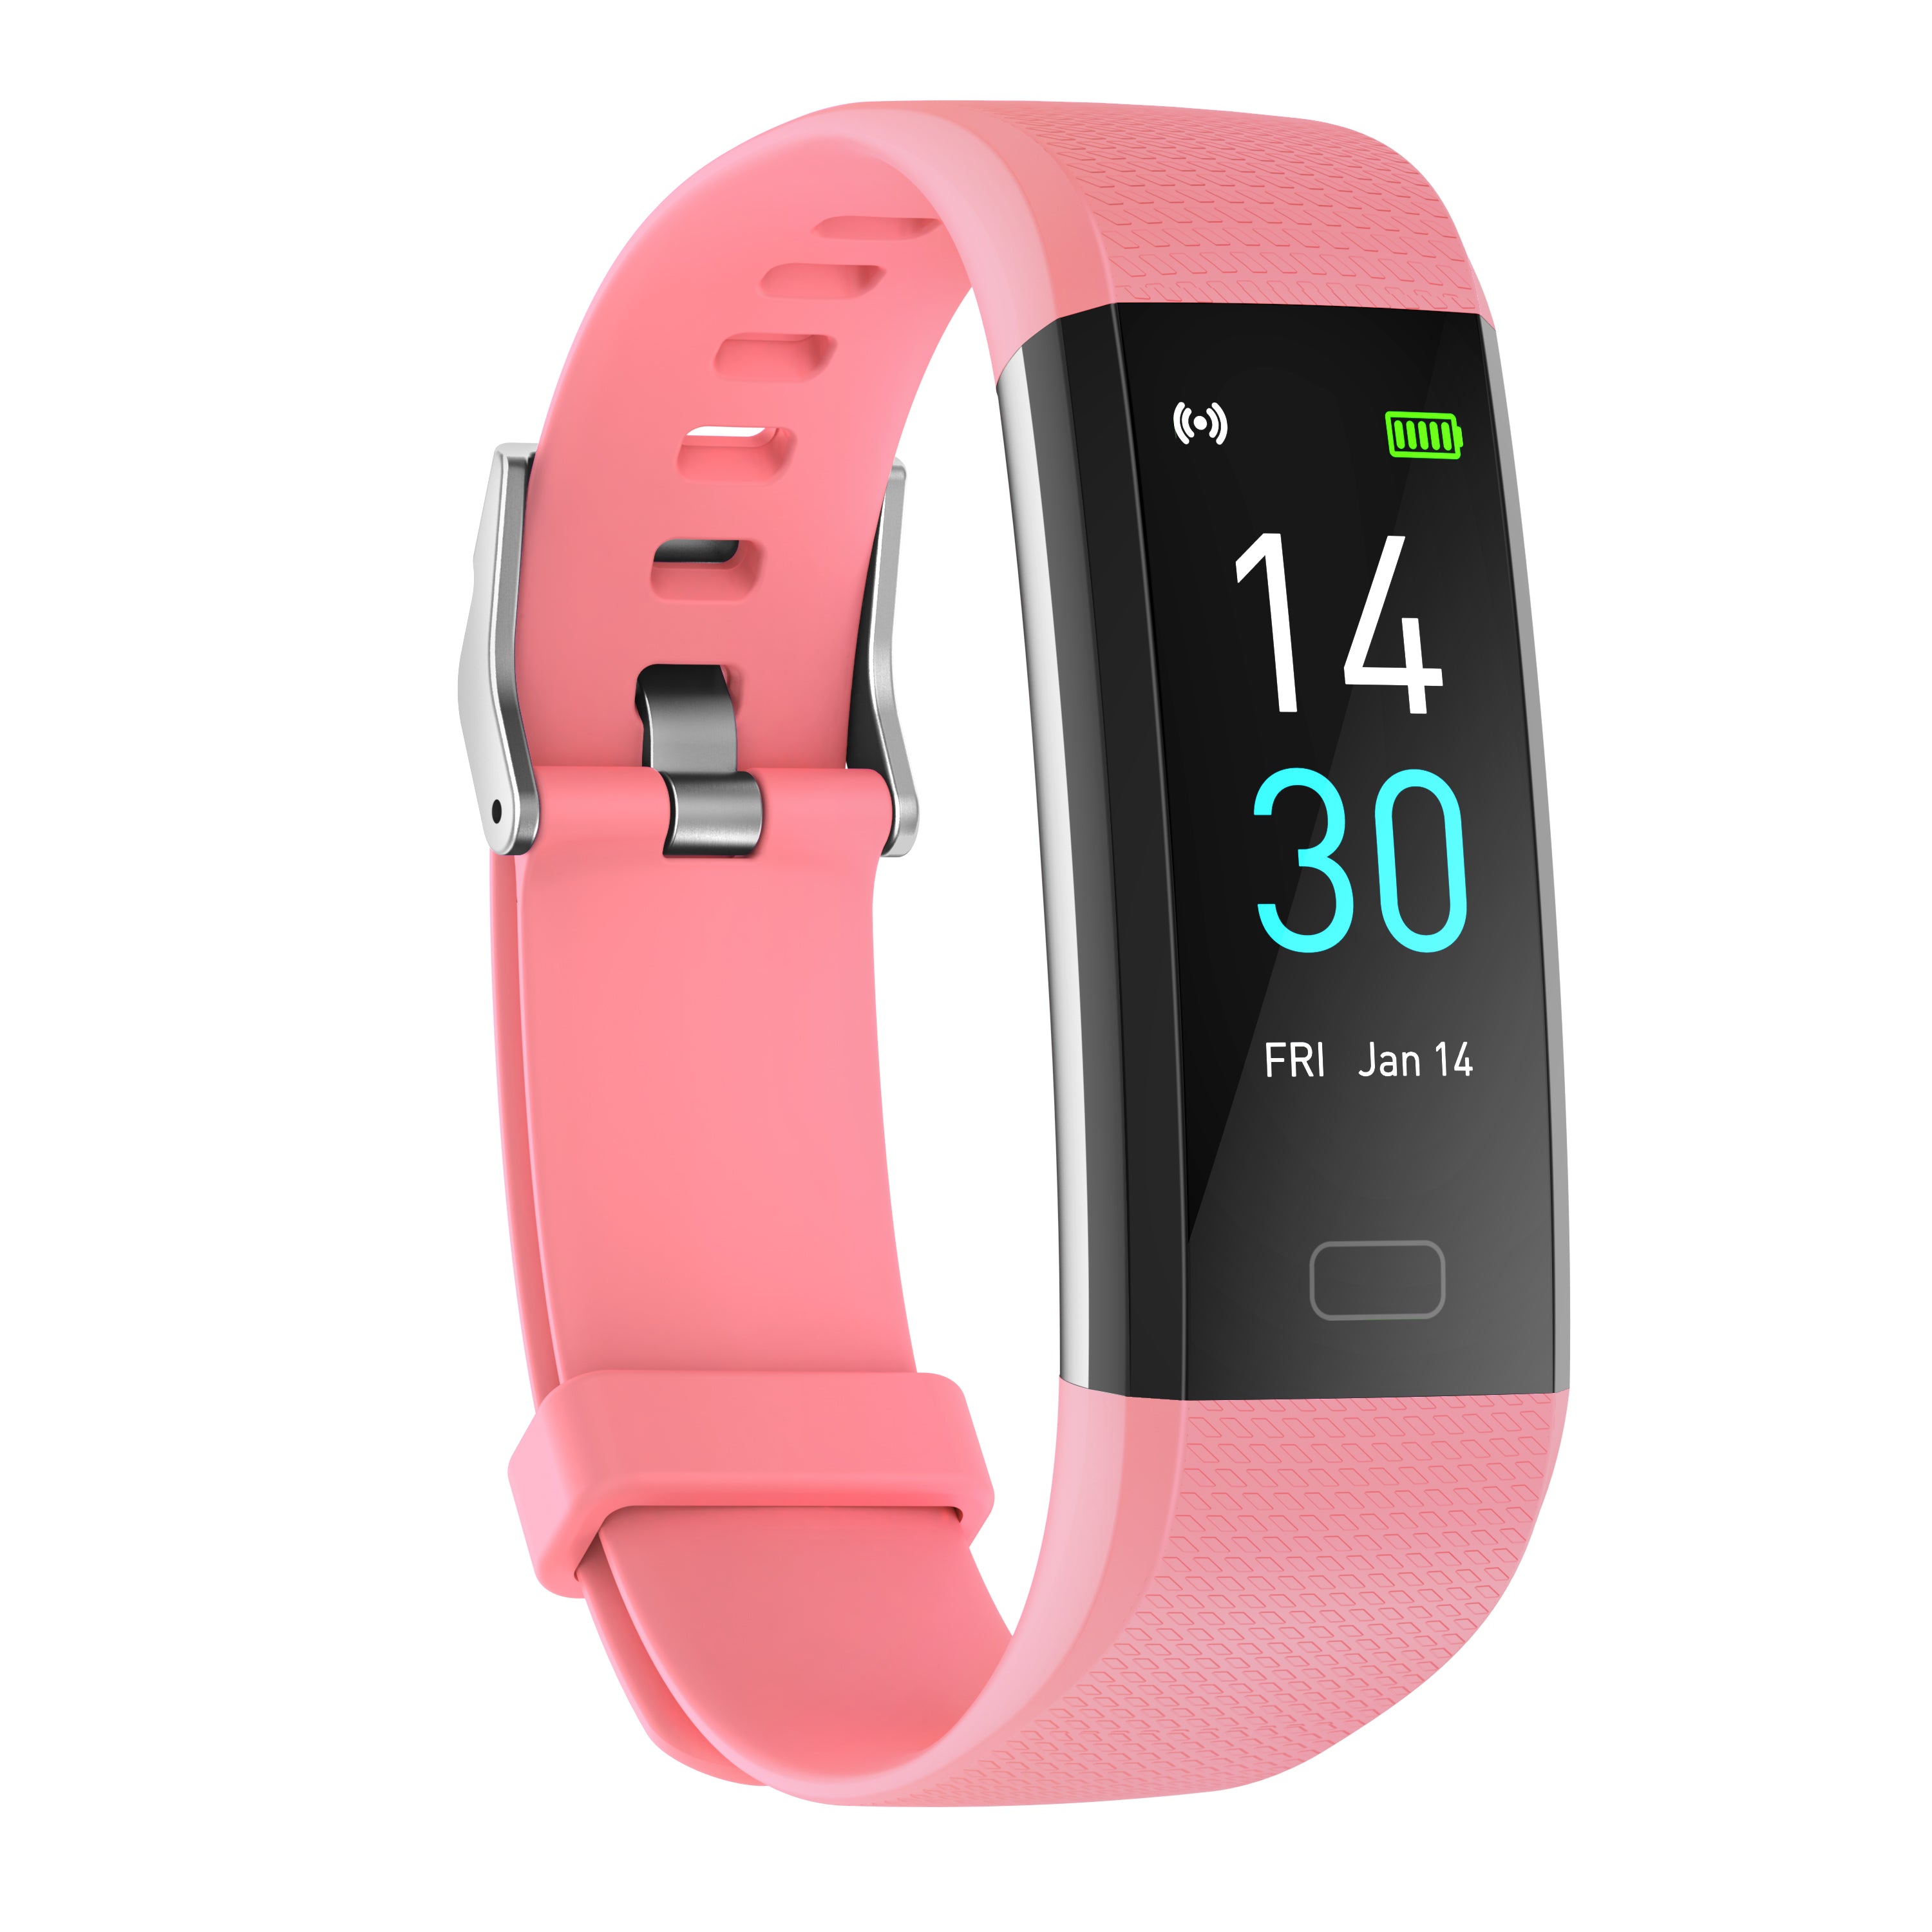 Wireless Mobile Technology stylish Smart watch for women.